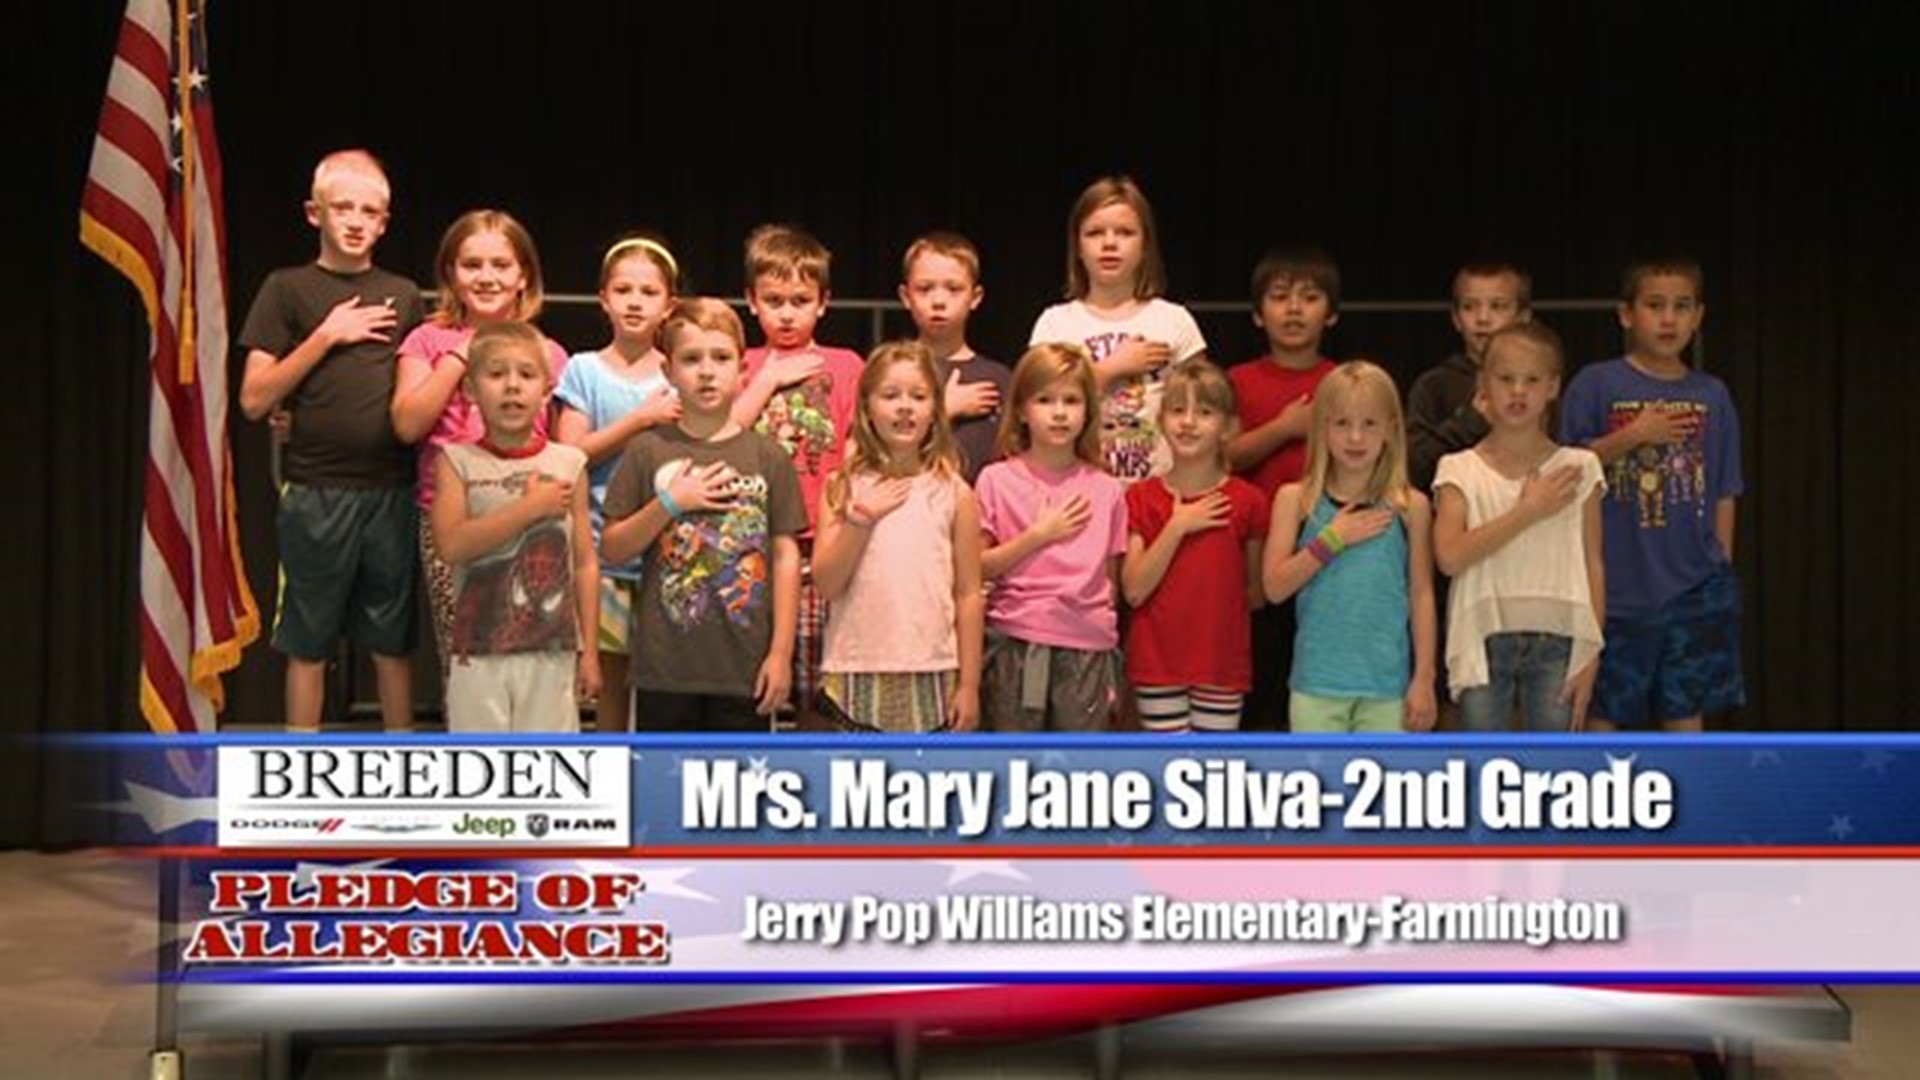 Jerry Pop Williams Elementary, Farmington - Mrs. Mary Jane Silva - 2nd Grade